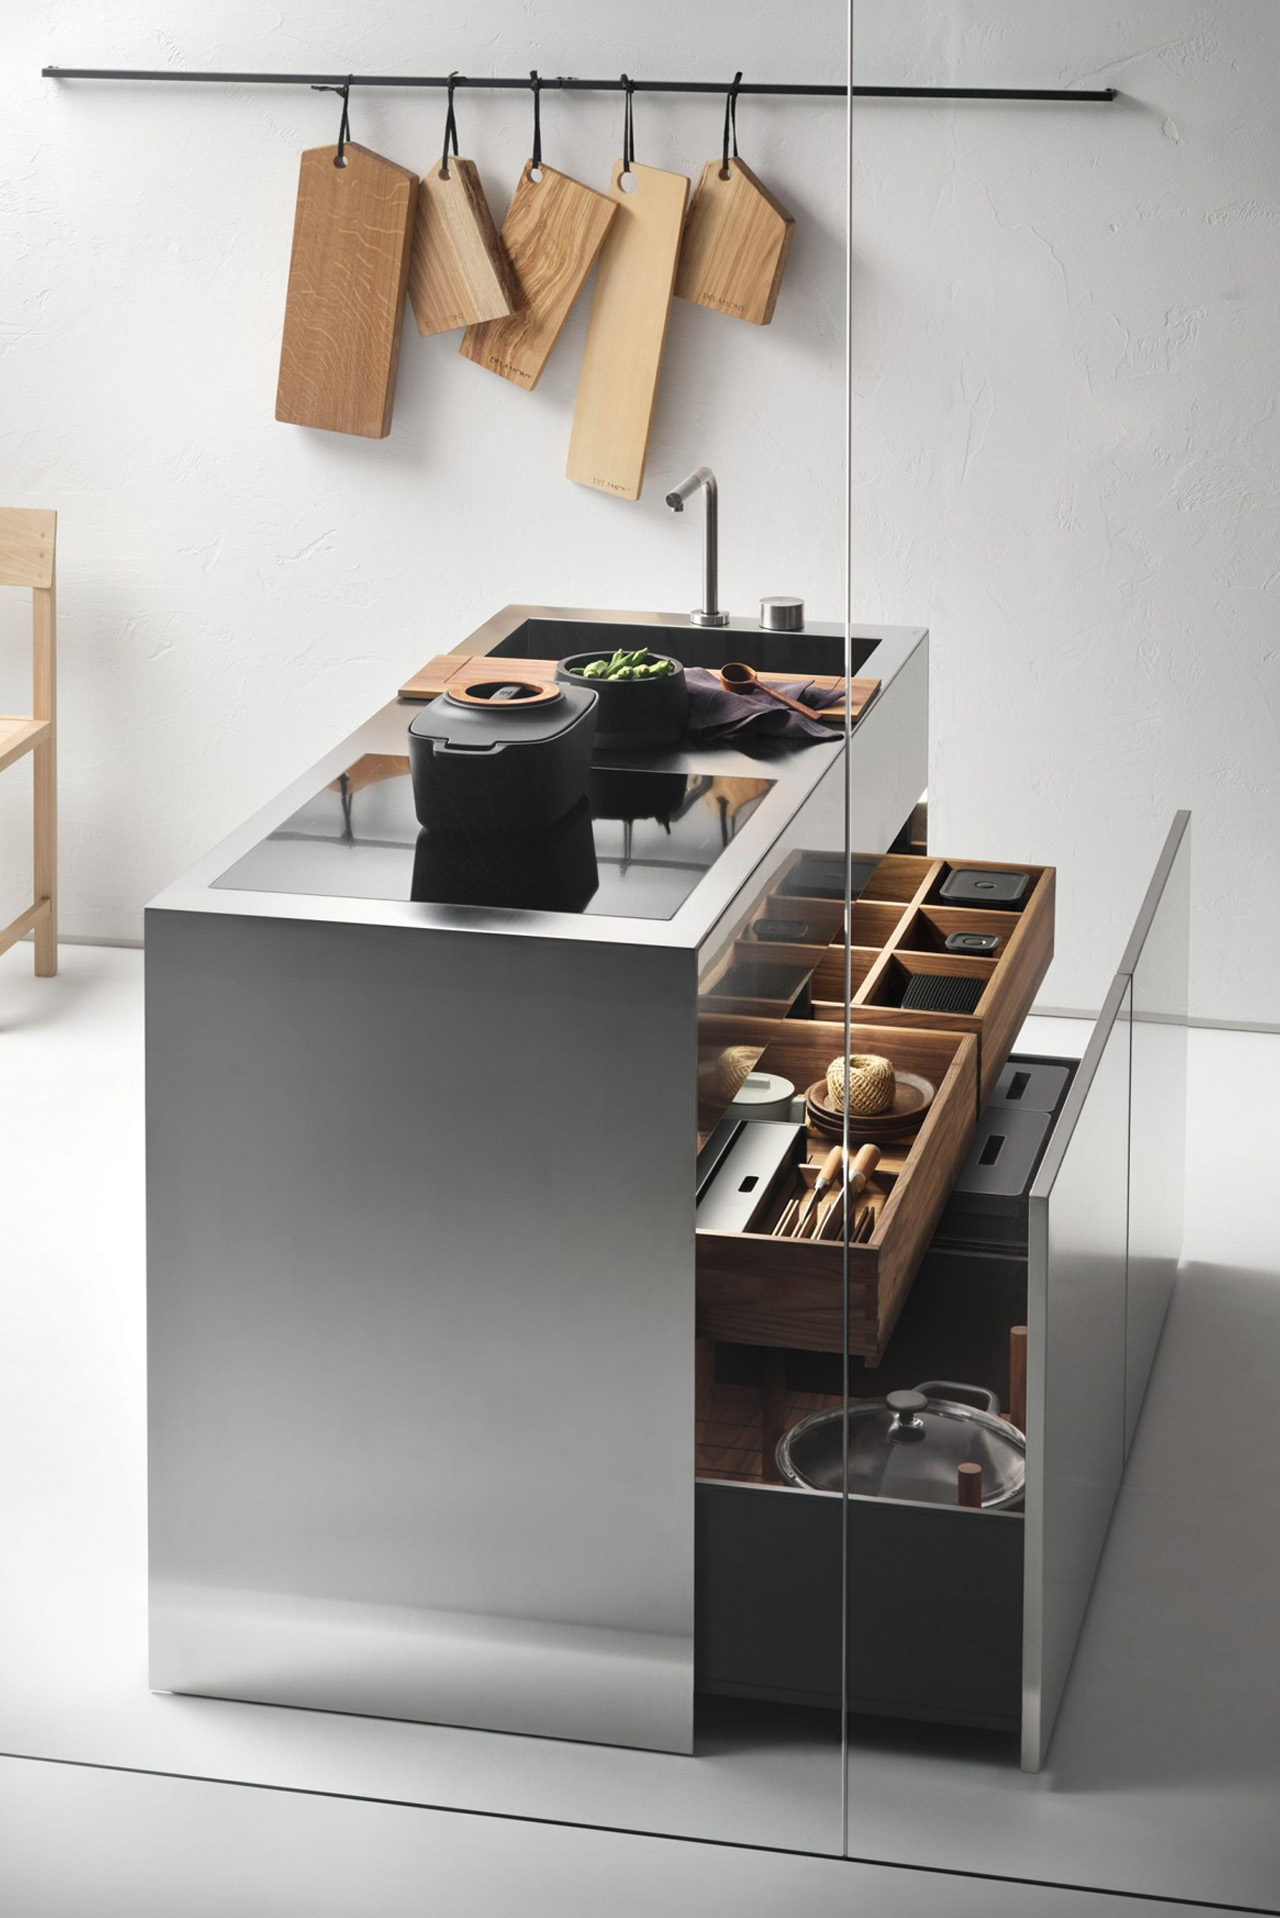 This modern minimal kitchen island is designed to make a tiny kitchen feel luxurious + spacious